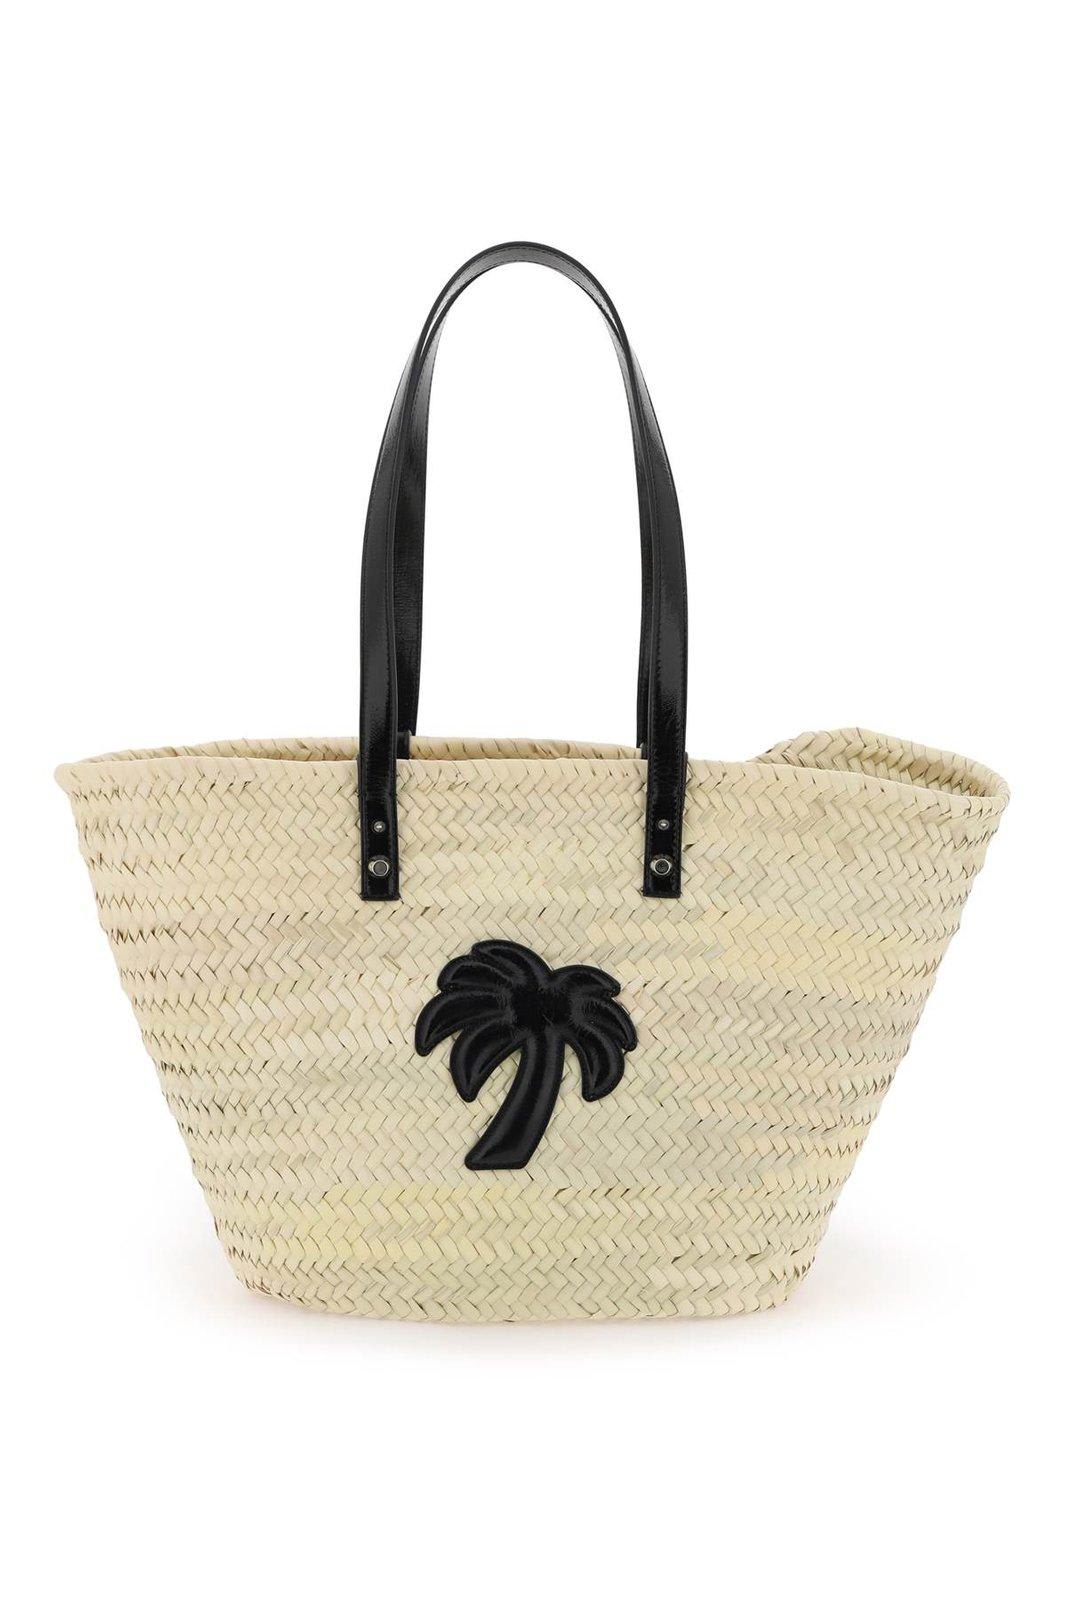 Palm Angels Palm Patch Interwoven Basket Bag In Black